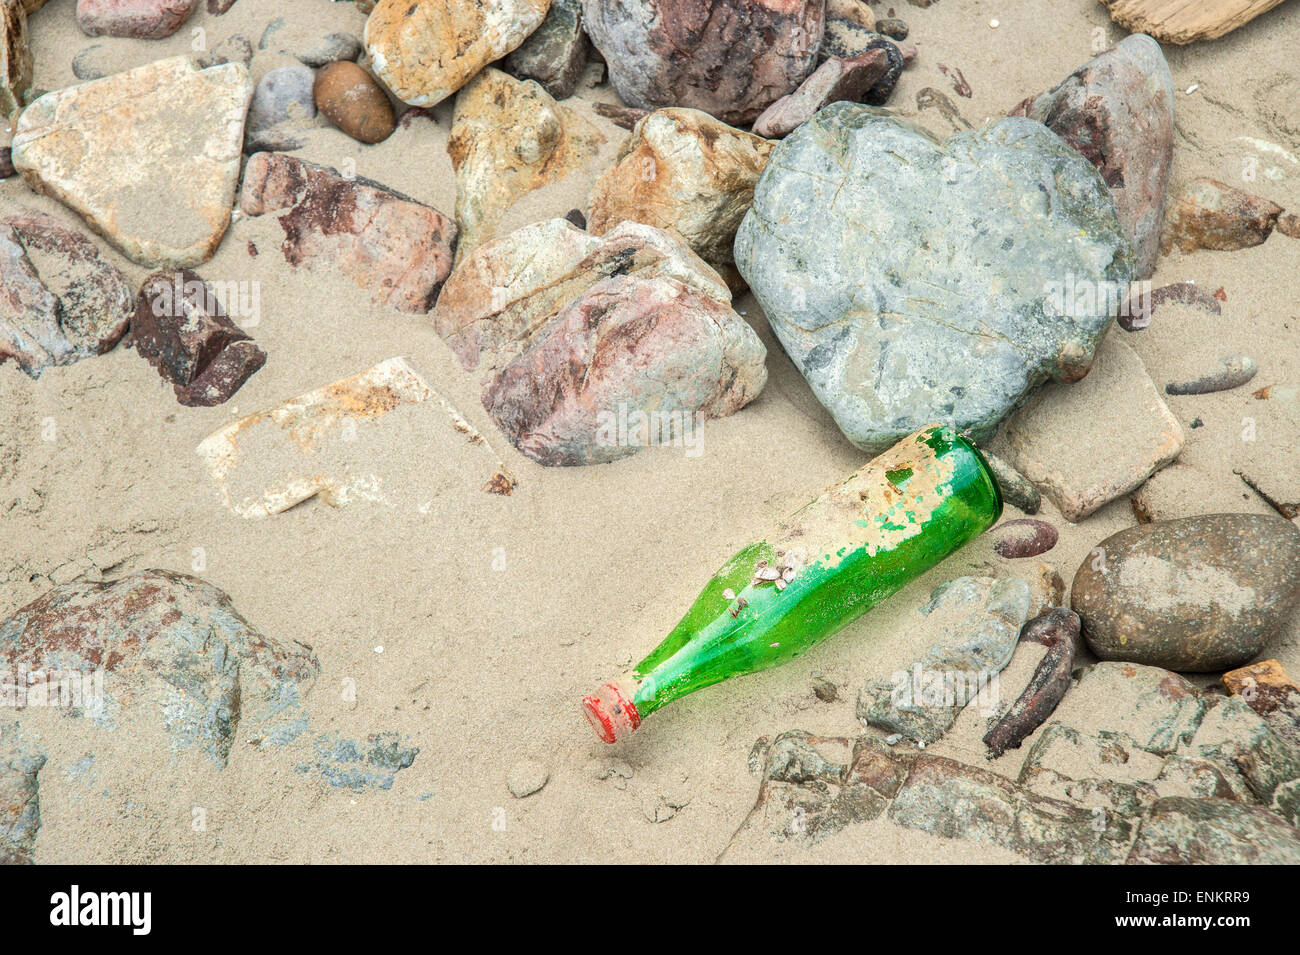 Rubbish on a beach, in Hong-Kong Stock Photo